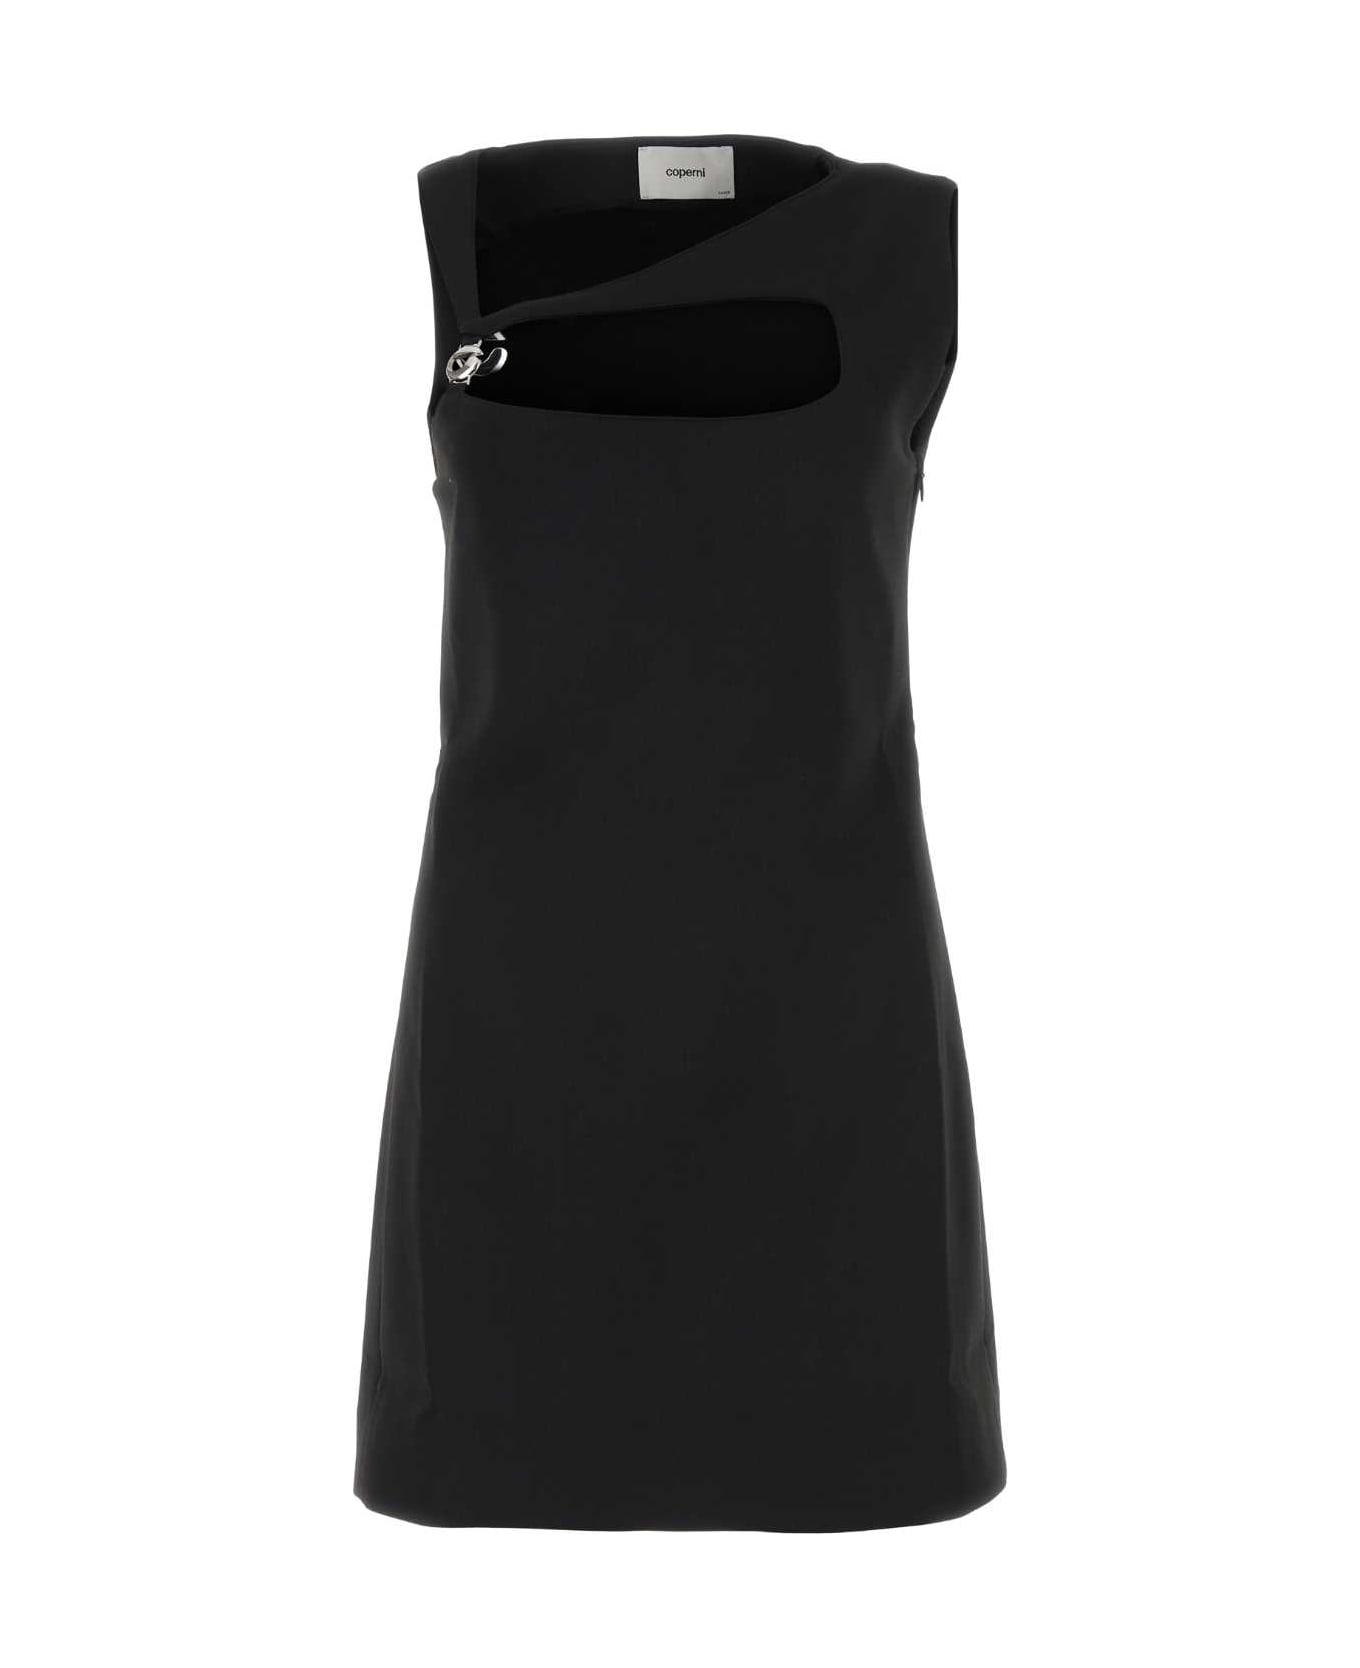 Coperni Black Stretch Jersey Fitted Dress - BLACK タンクトップ